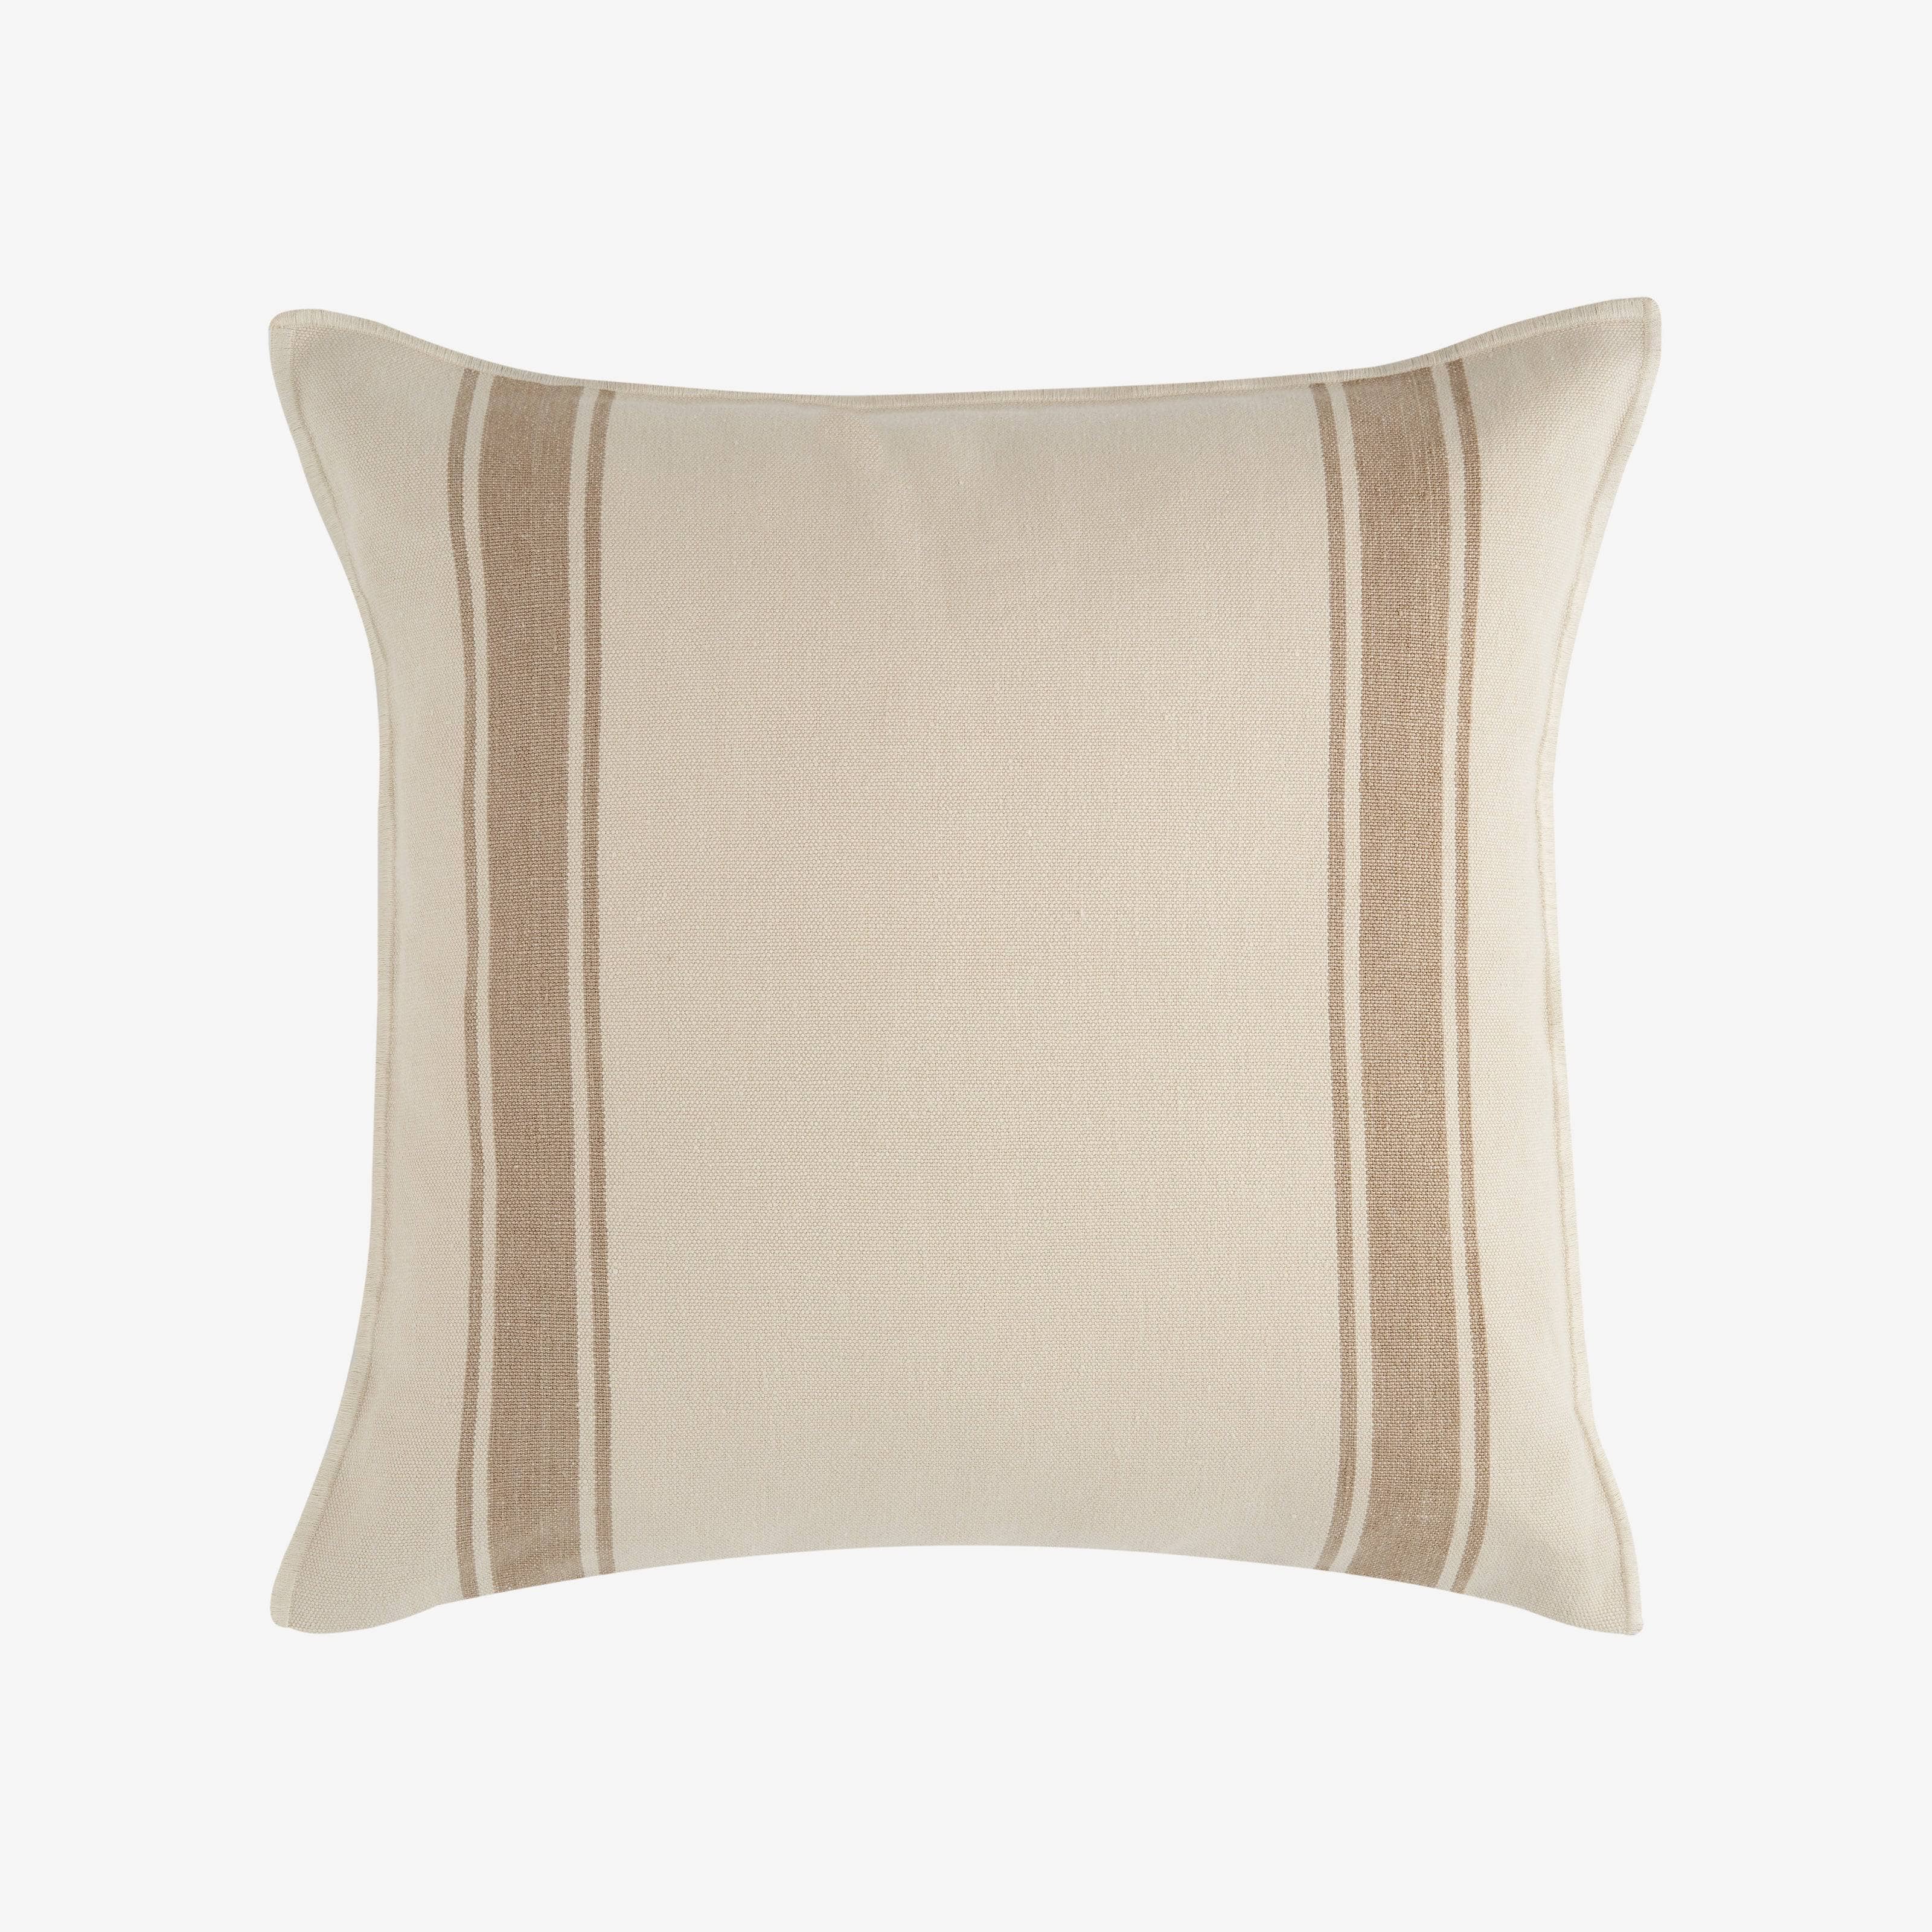 Lido Striped Linen Cushion Cover, Natural - Beige, 45x45 cm - 1